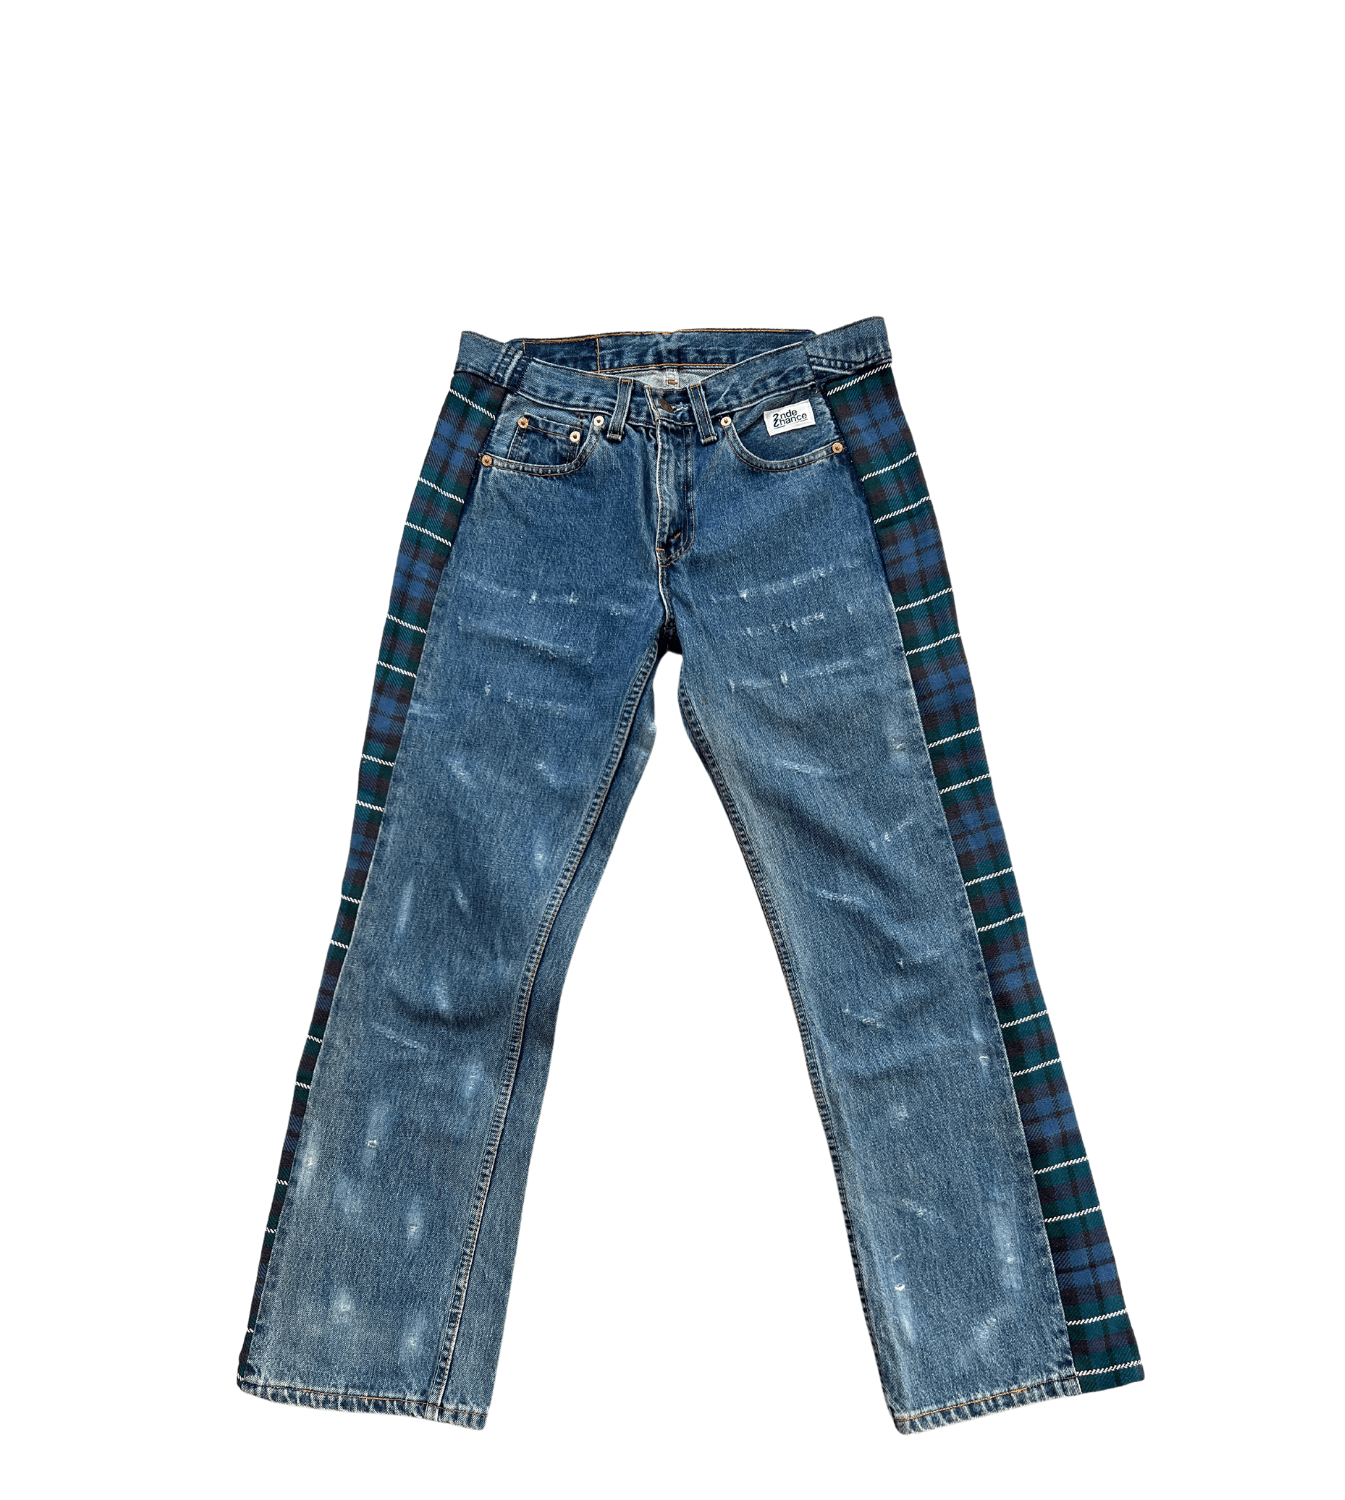 jeans-levis-rework-madeindijon-artisanat-devant